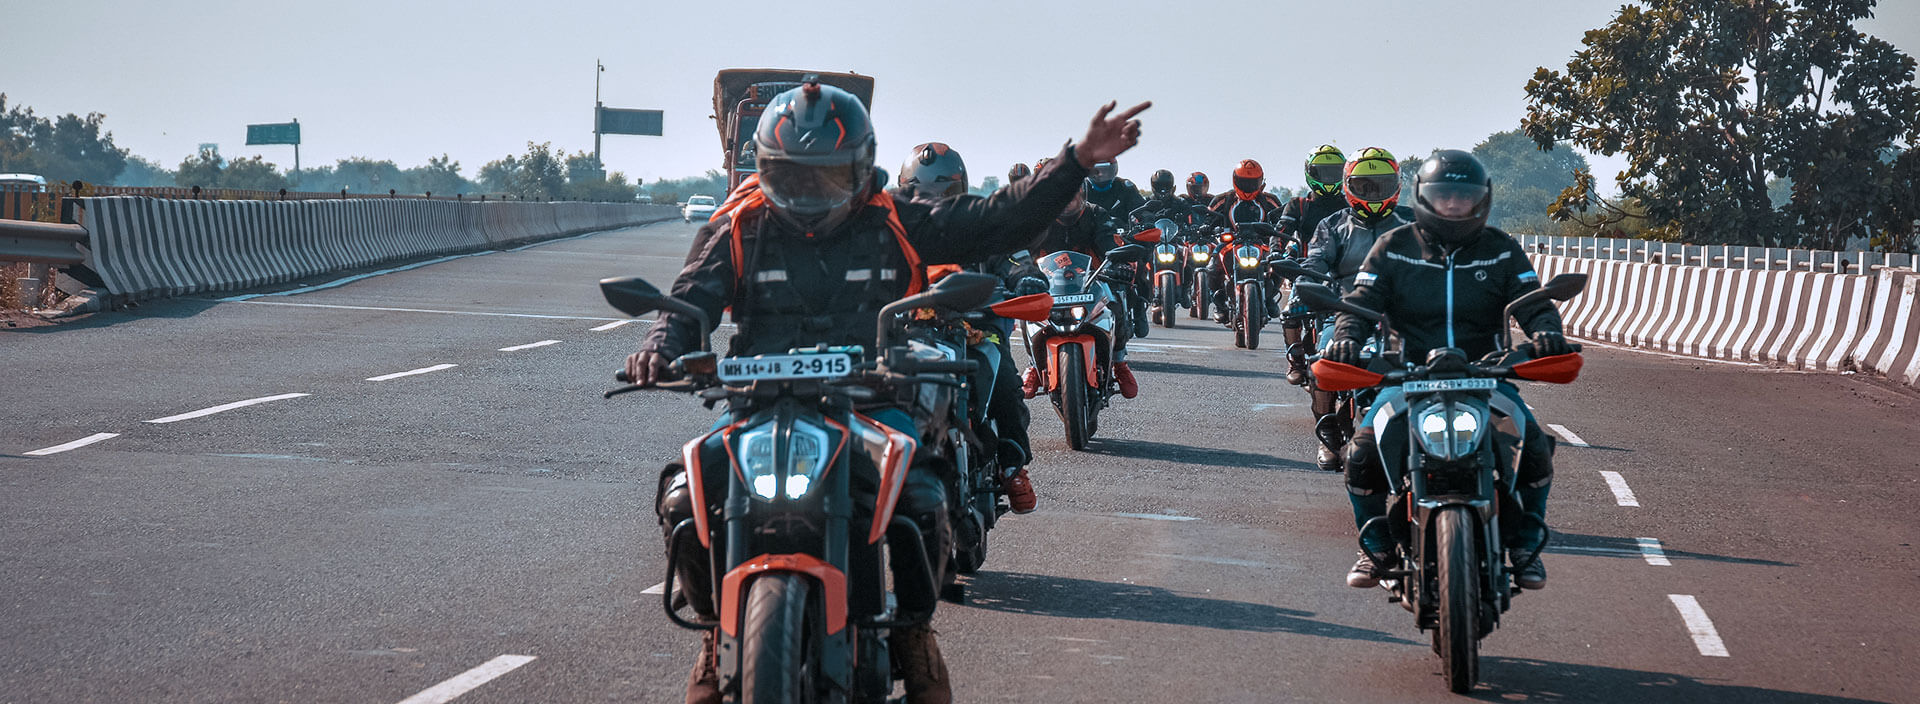 KTM bike riders going on long trip on highway 